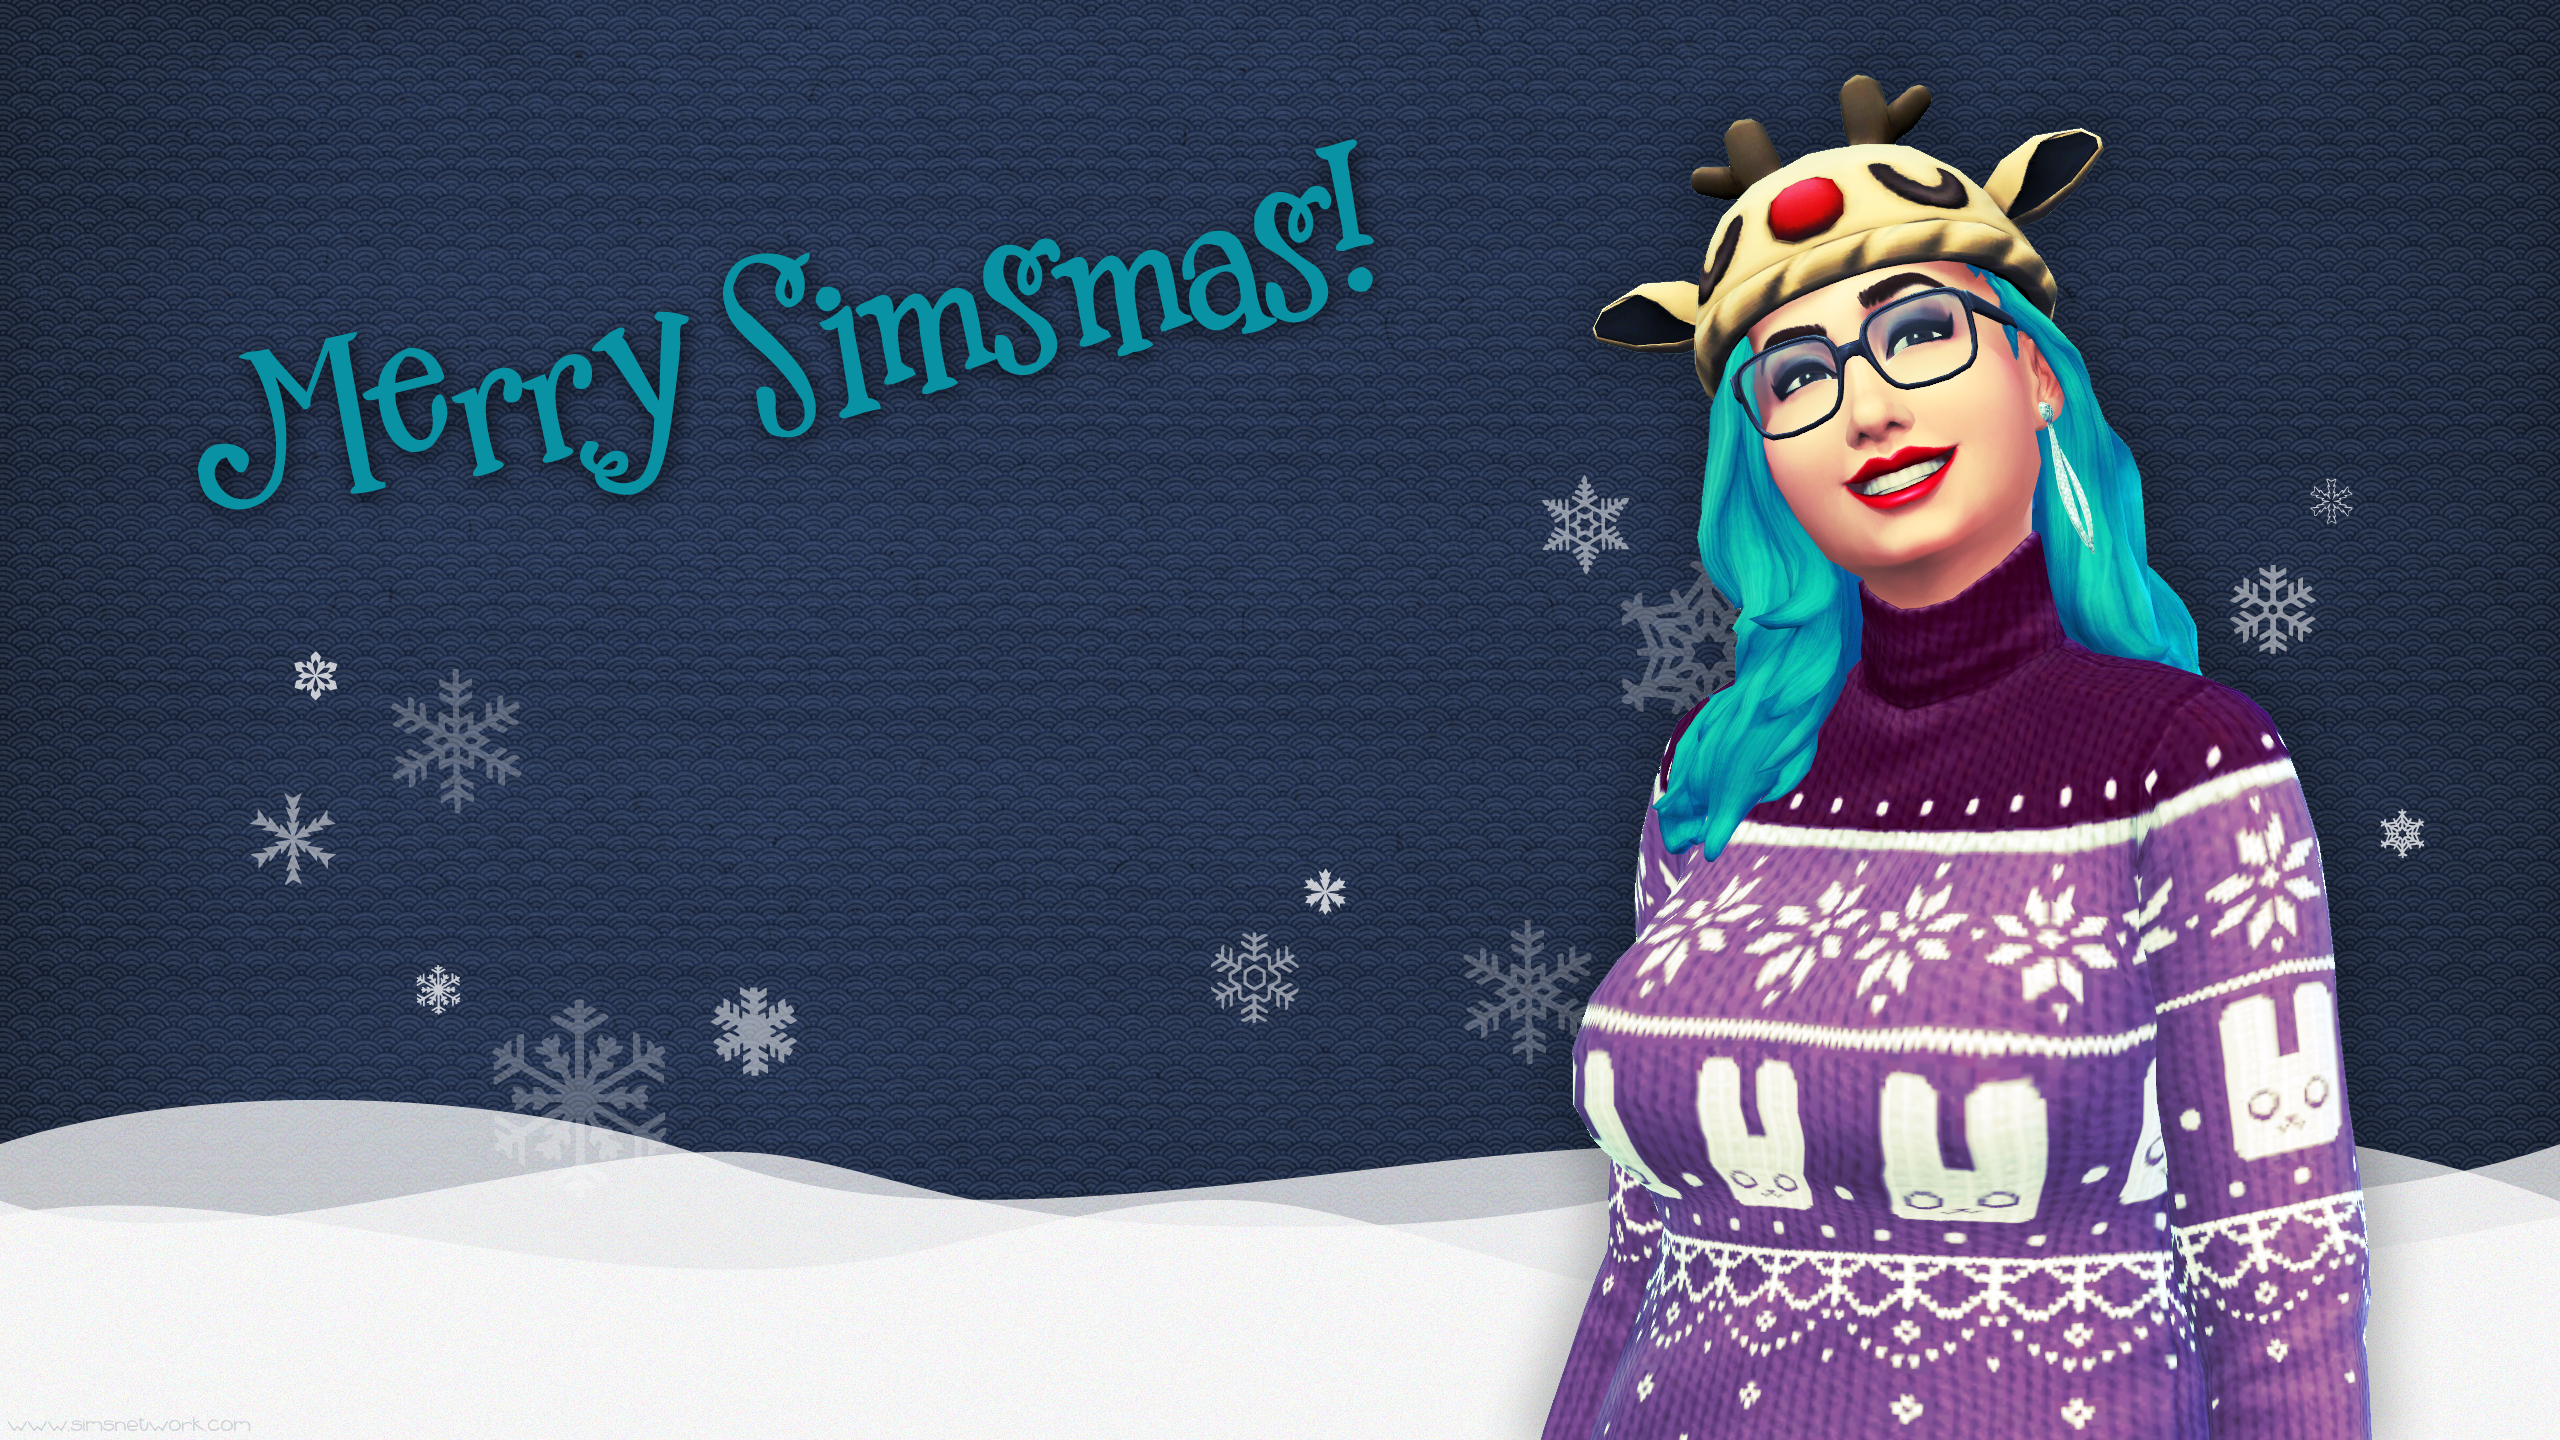 Merry Simsmas 2015 Christmas wallpaper